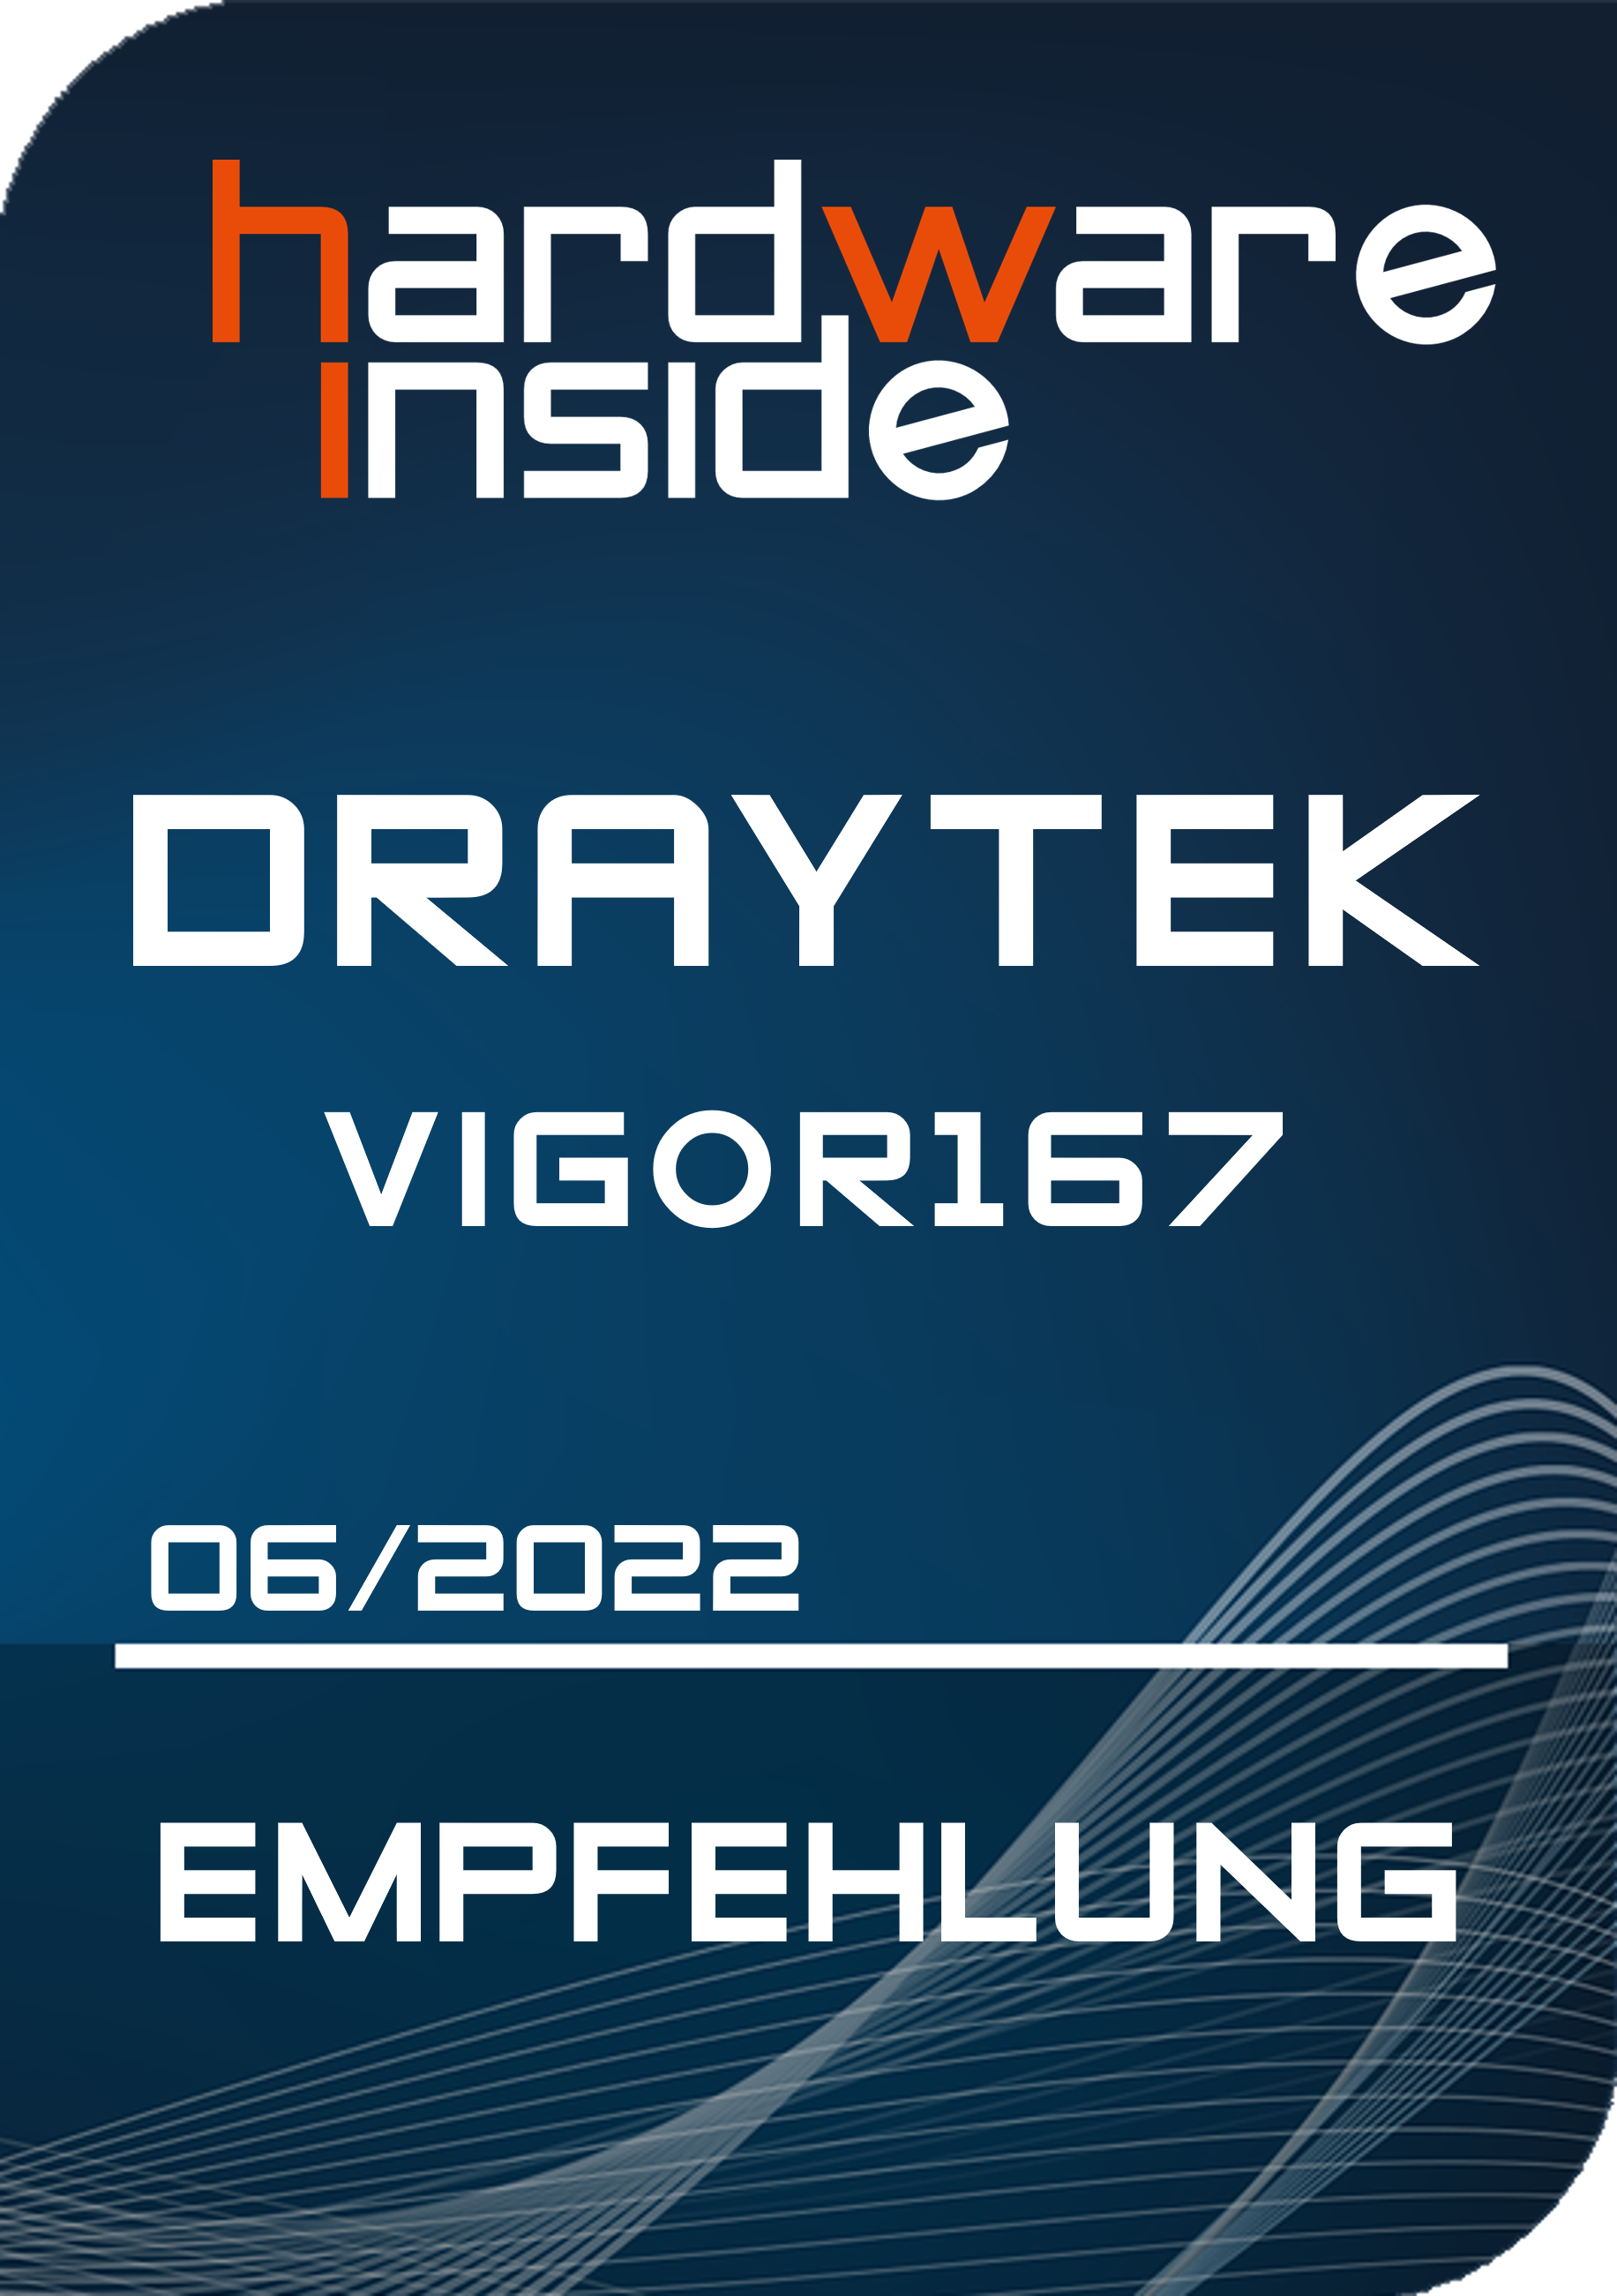 draytek-vigor167-review-award-highres.png